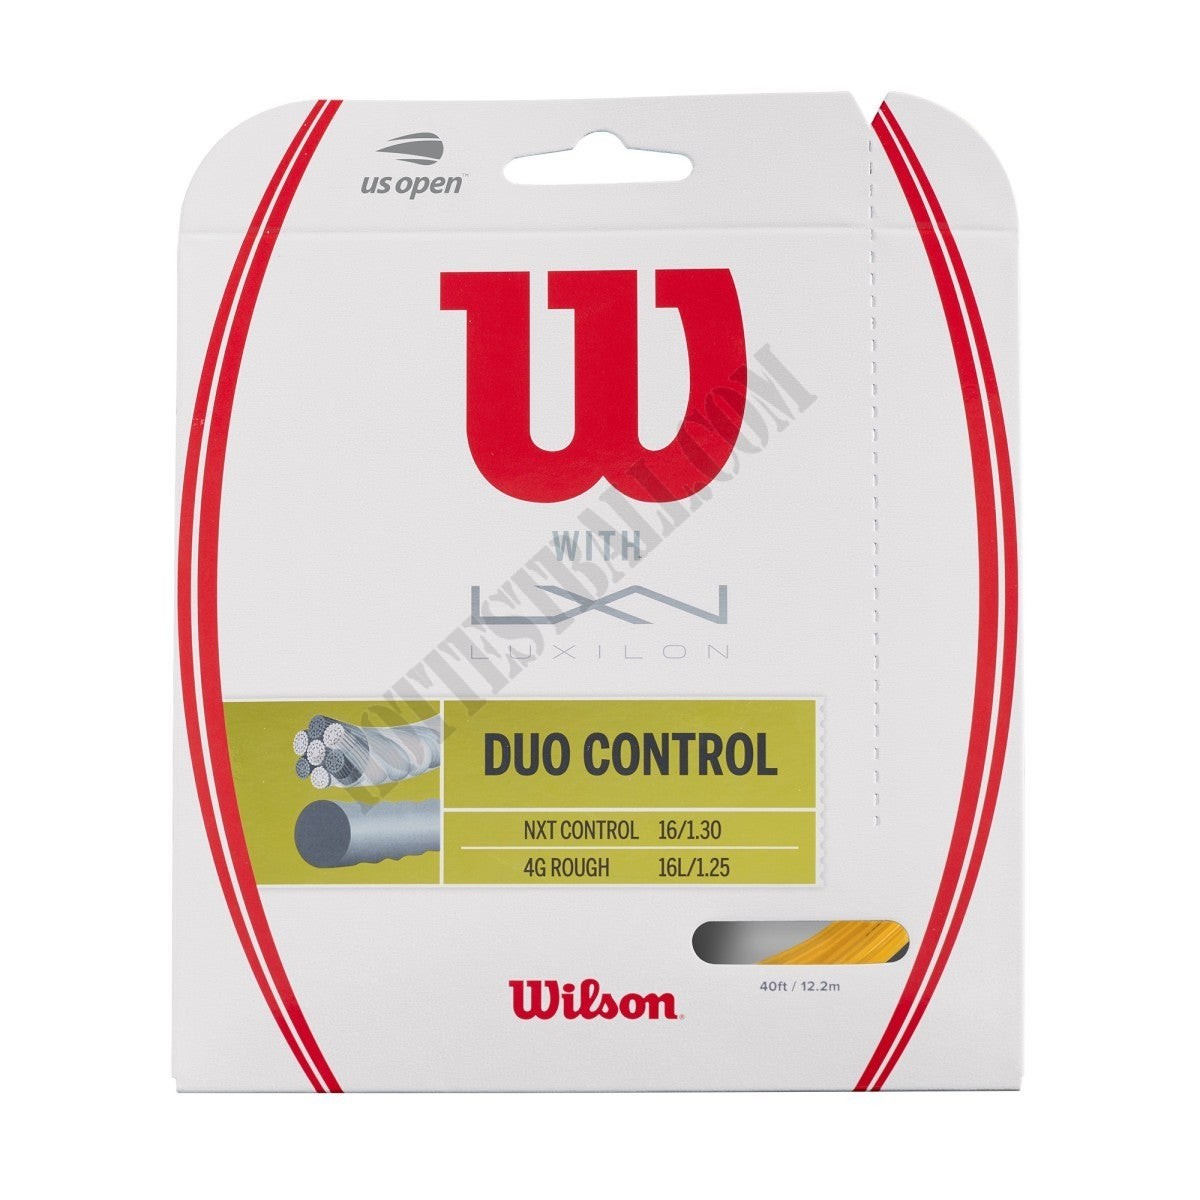 Duo Control Hybrid Tennis String - Set - Wilson Discount Store - Duo Control Hybrid Tennis String - Set - Wilson Discount Store